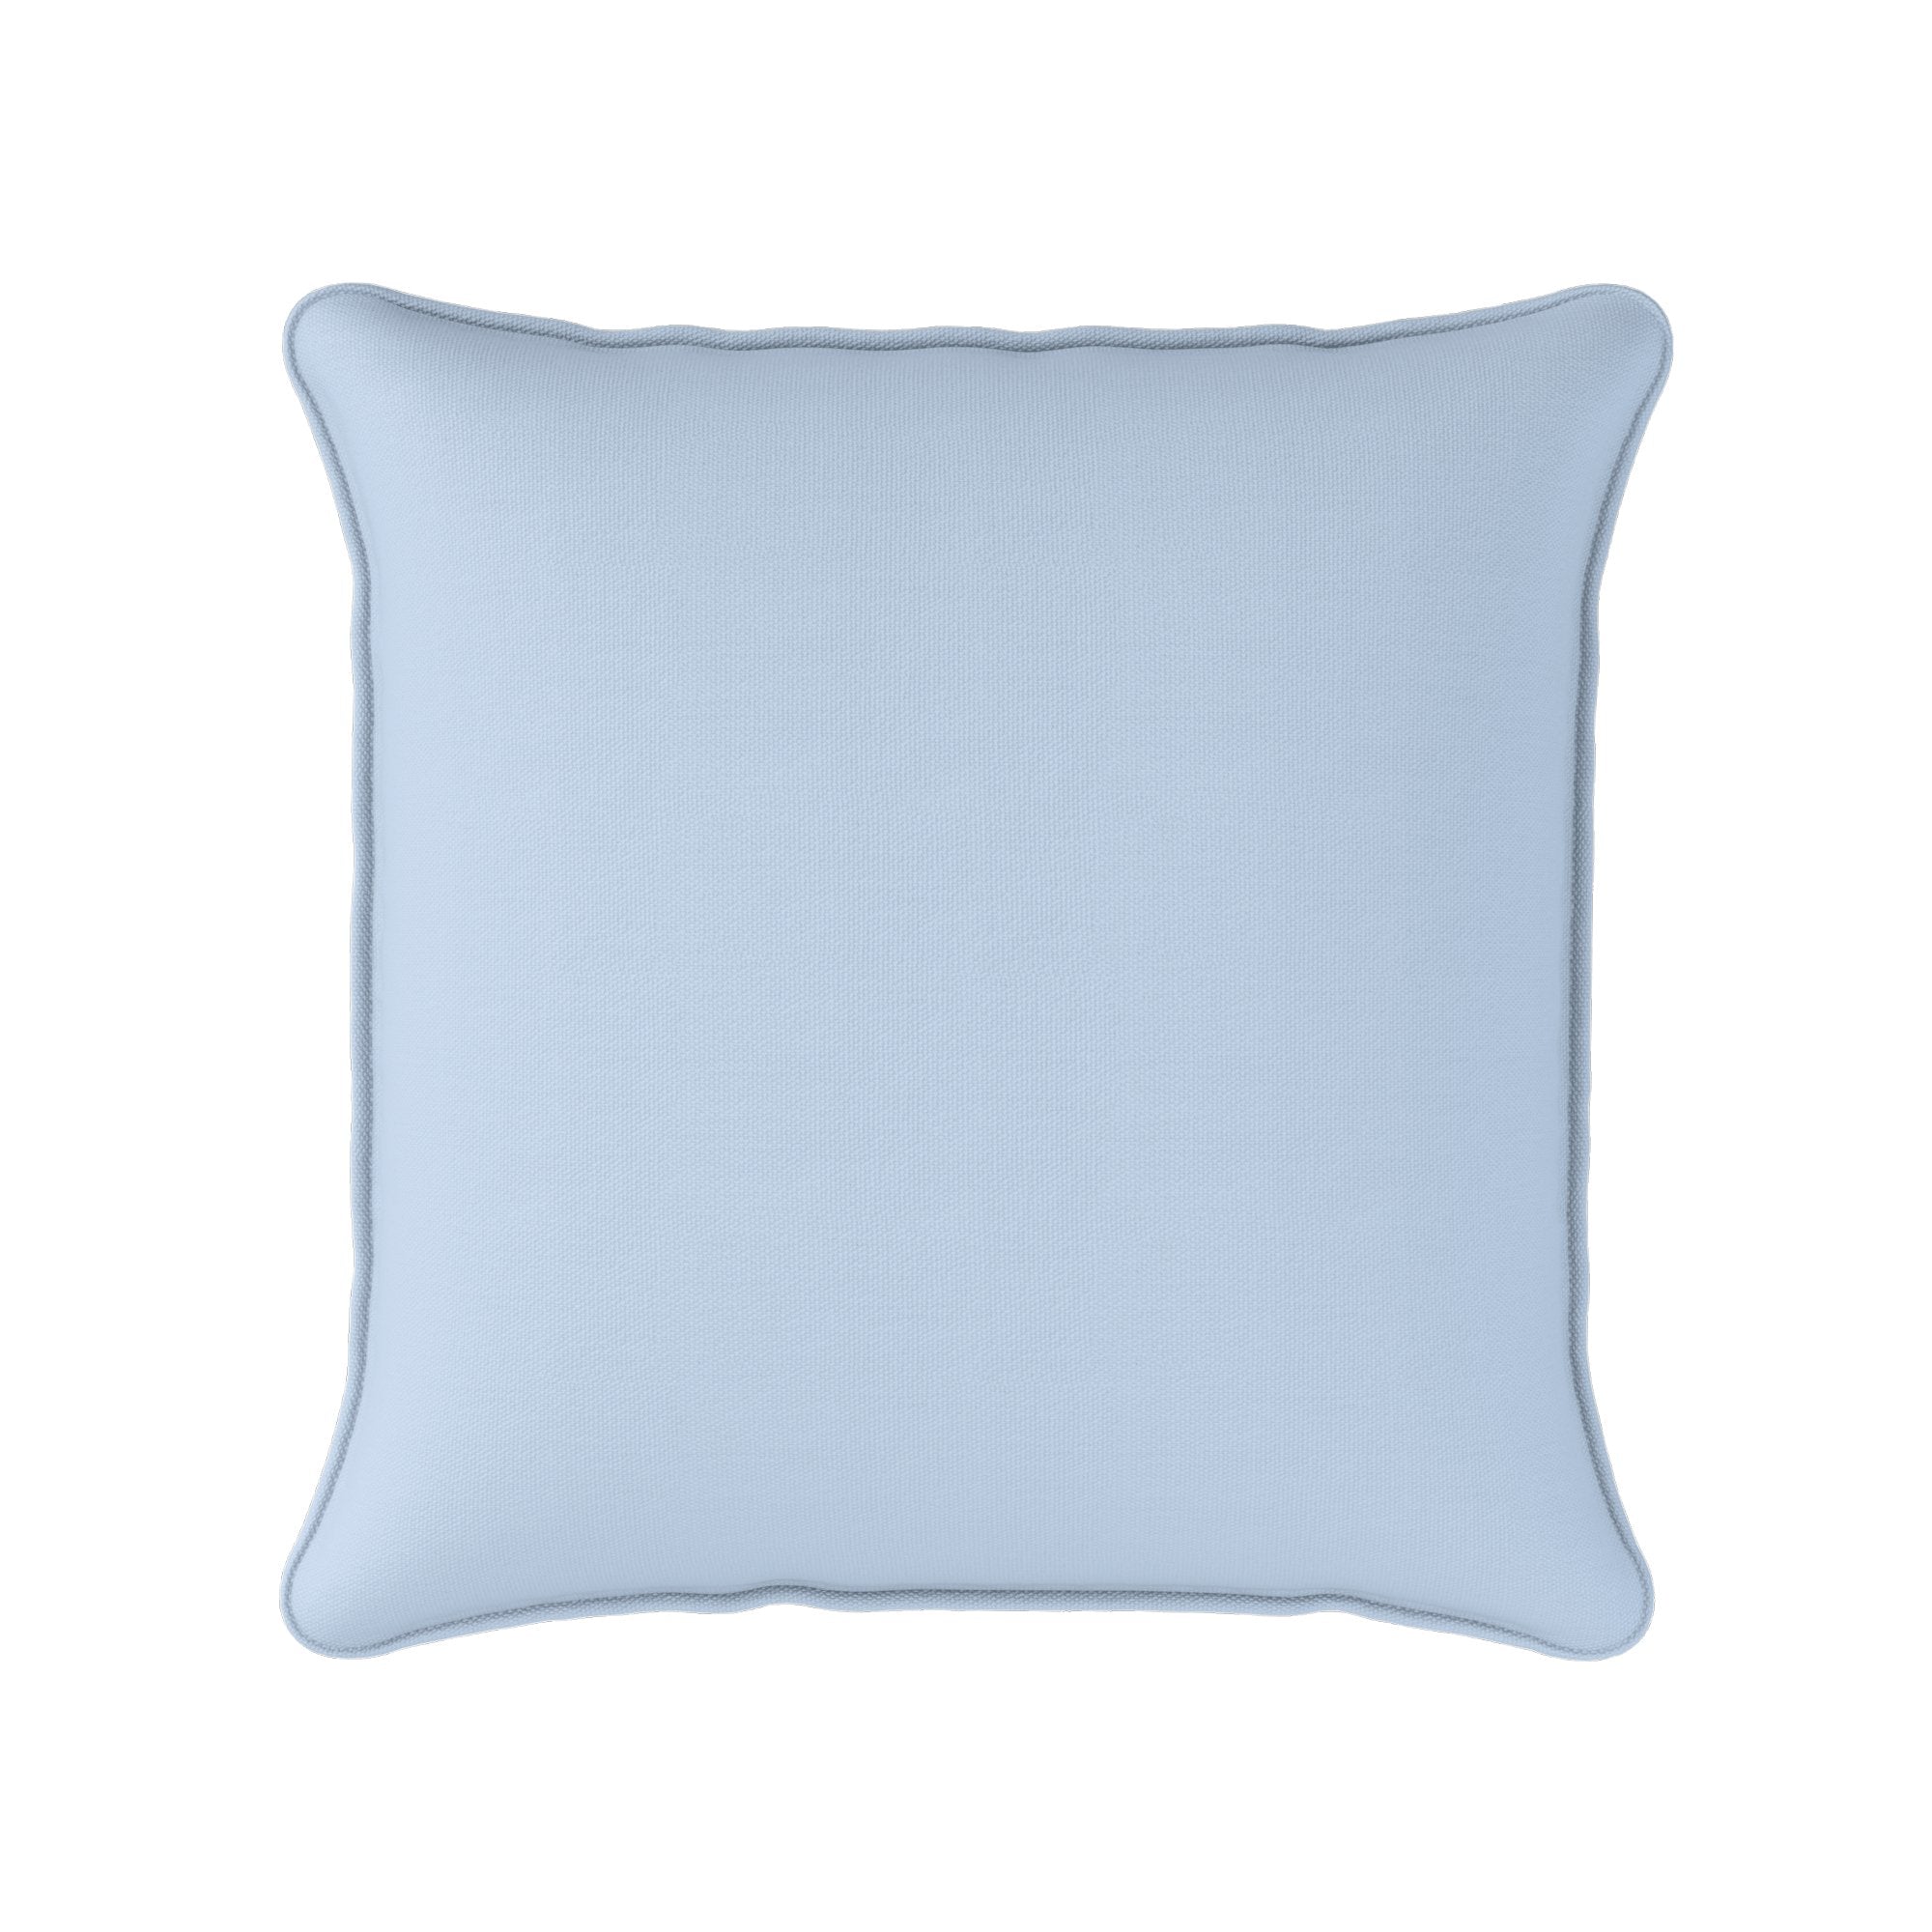 Perfectly Plain Cushion - Blues - Hydrangea Lane Home